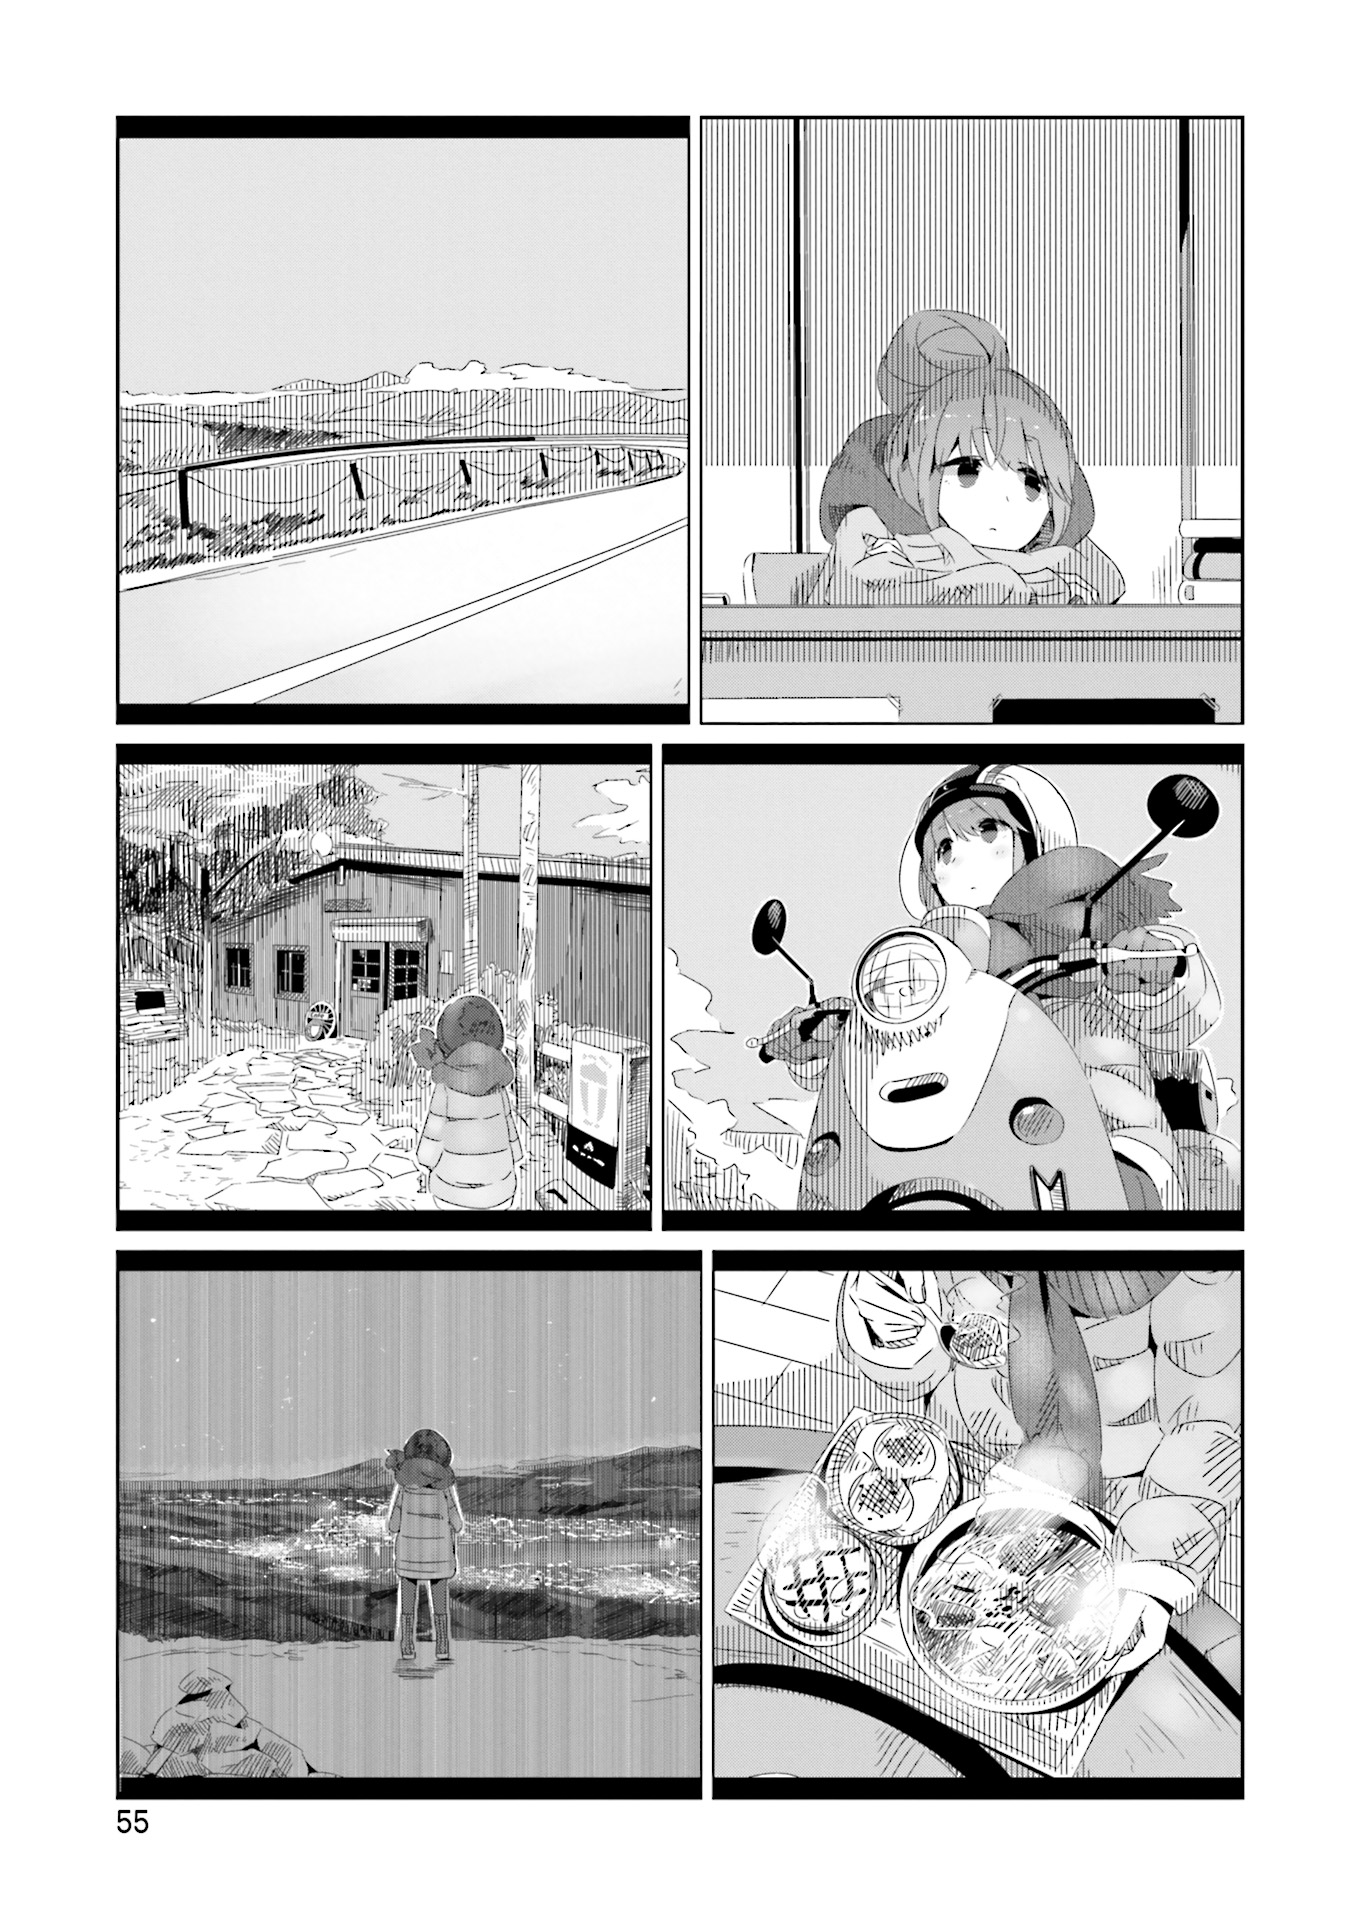 Yuru Camp - Chapter 9 - Page 4